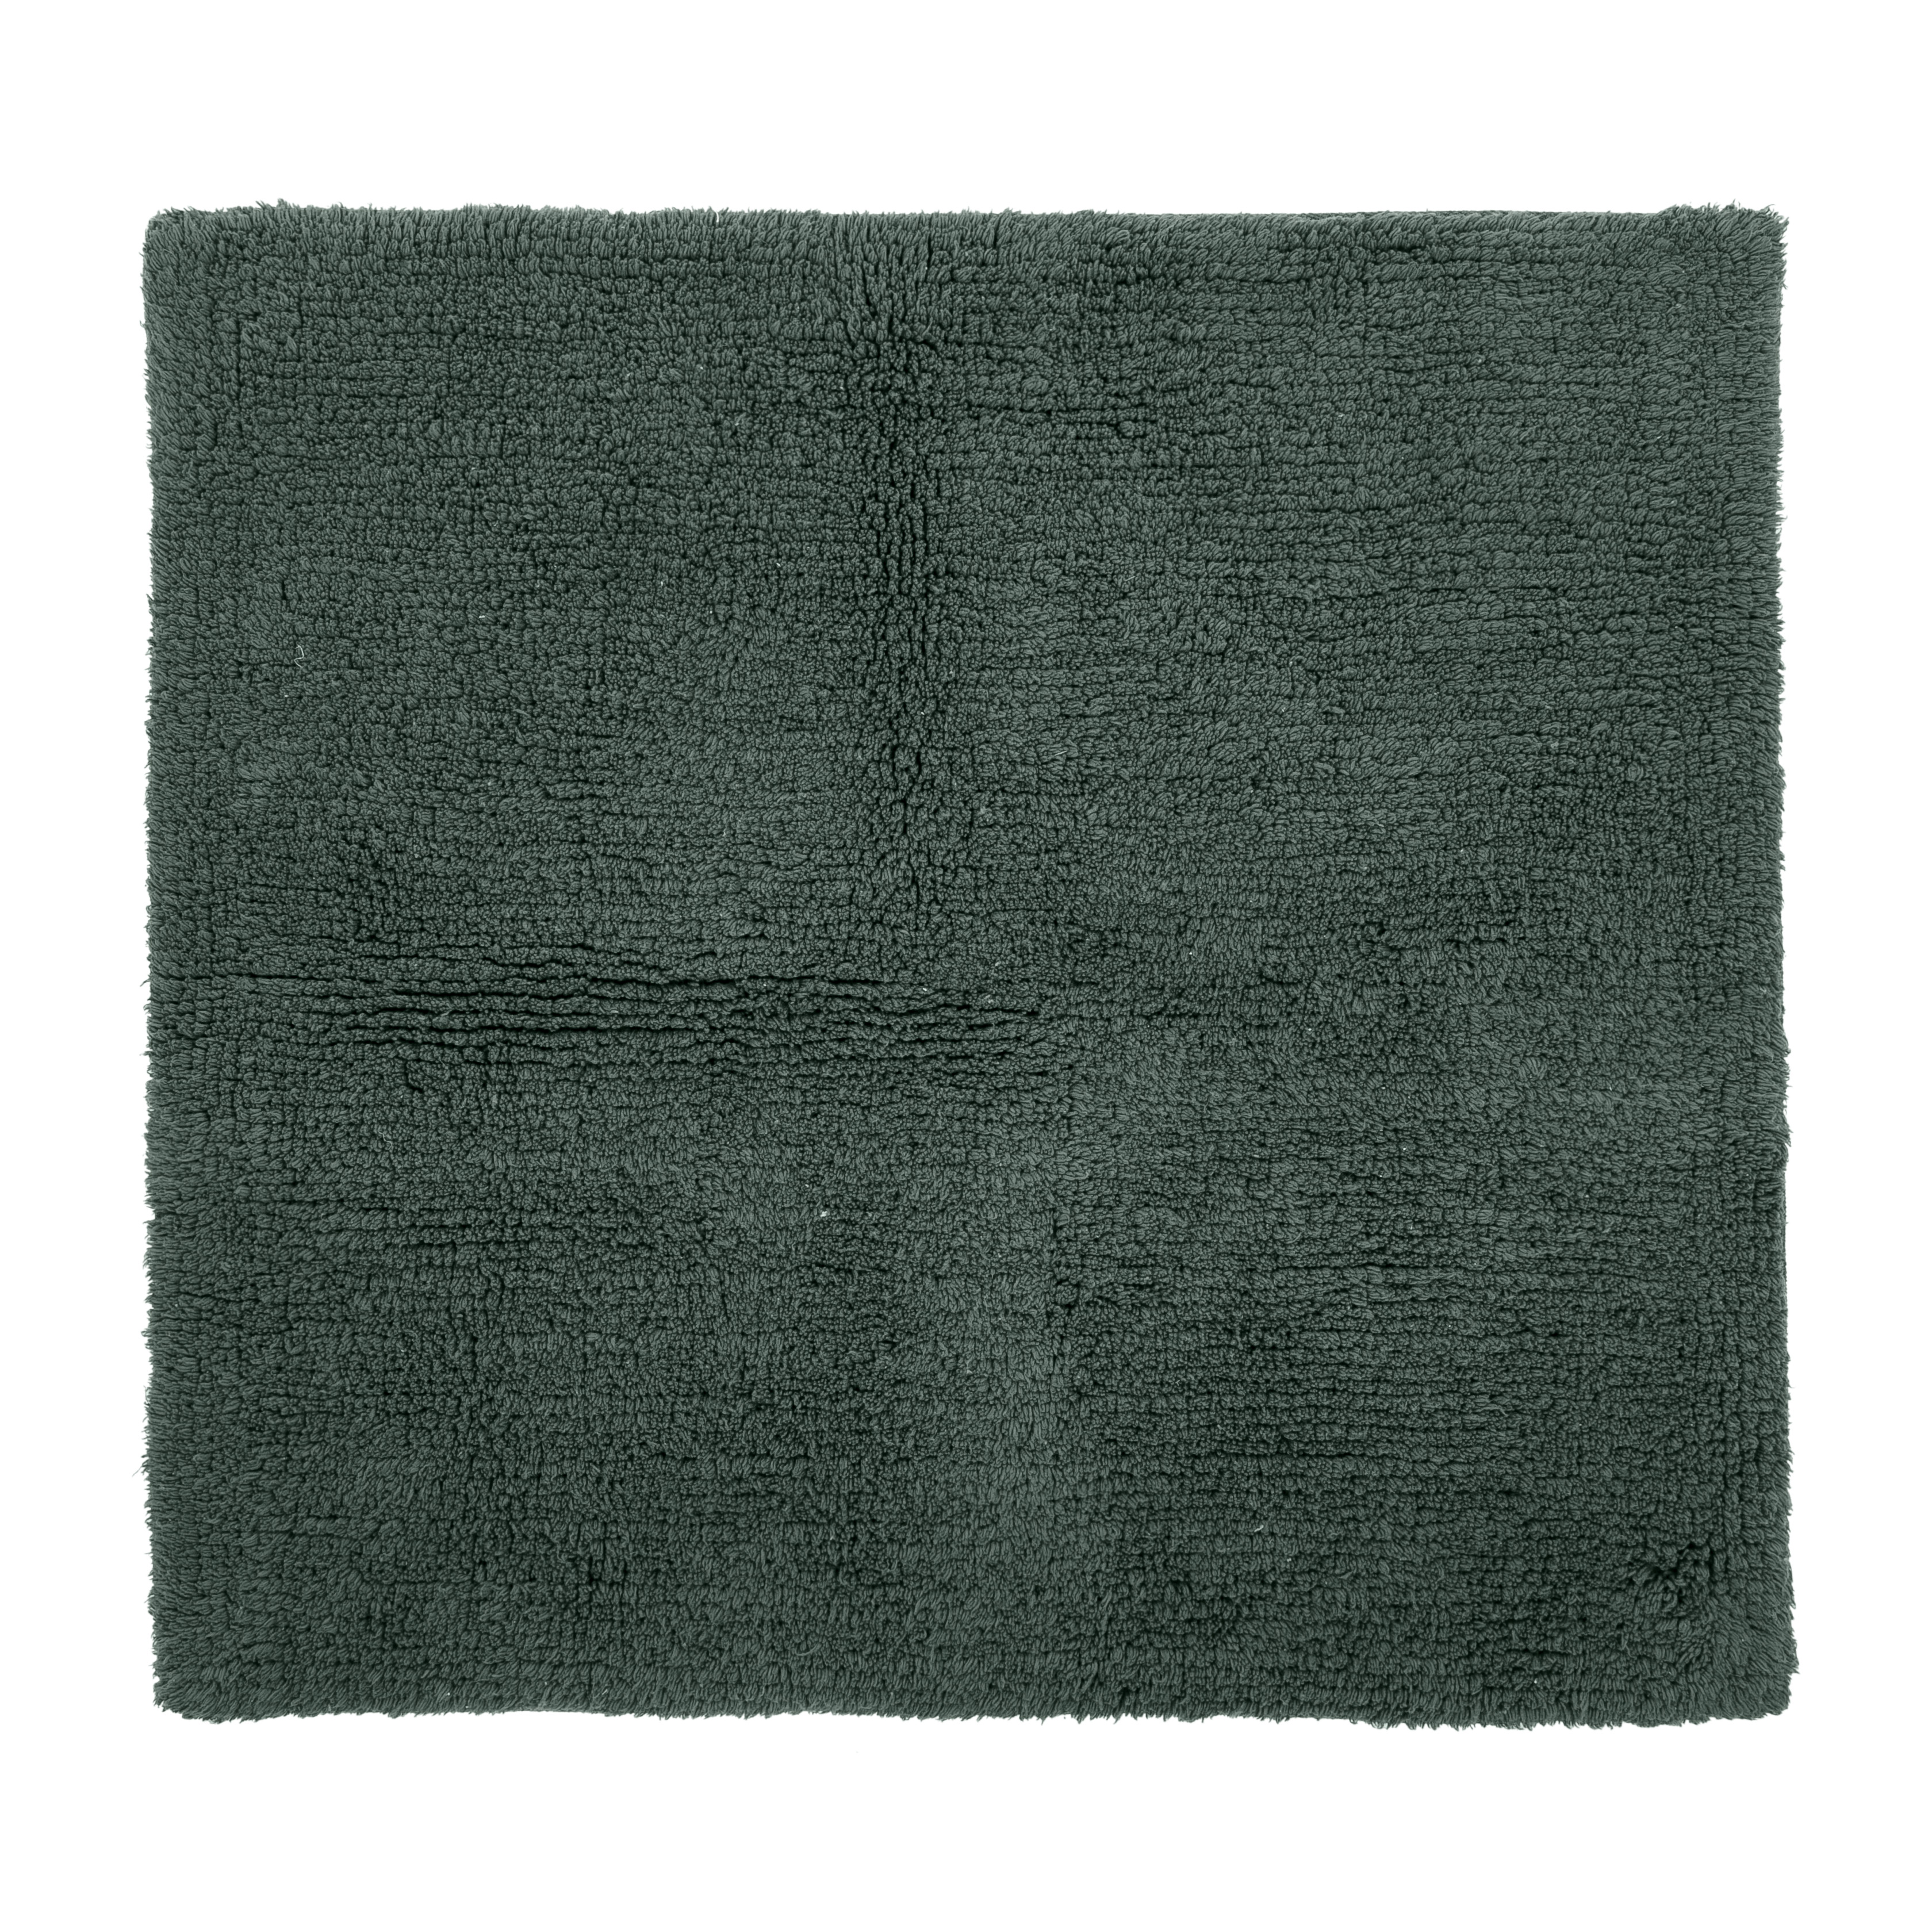 RIVA tapis de bain - coton antidérapant, 60x60cm, dark green